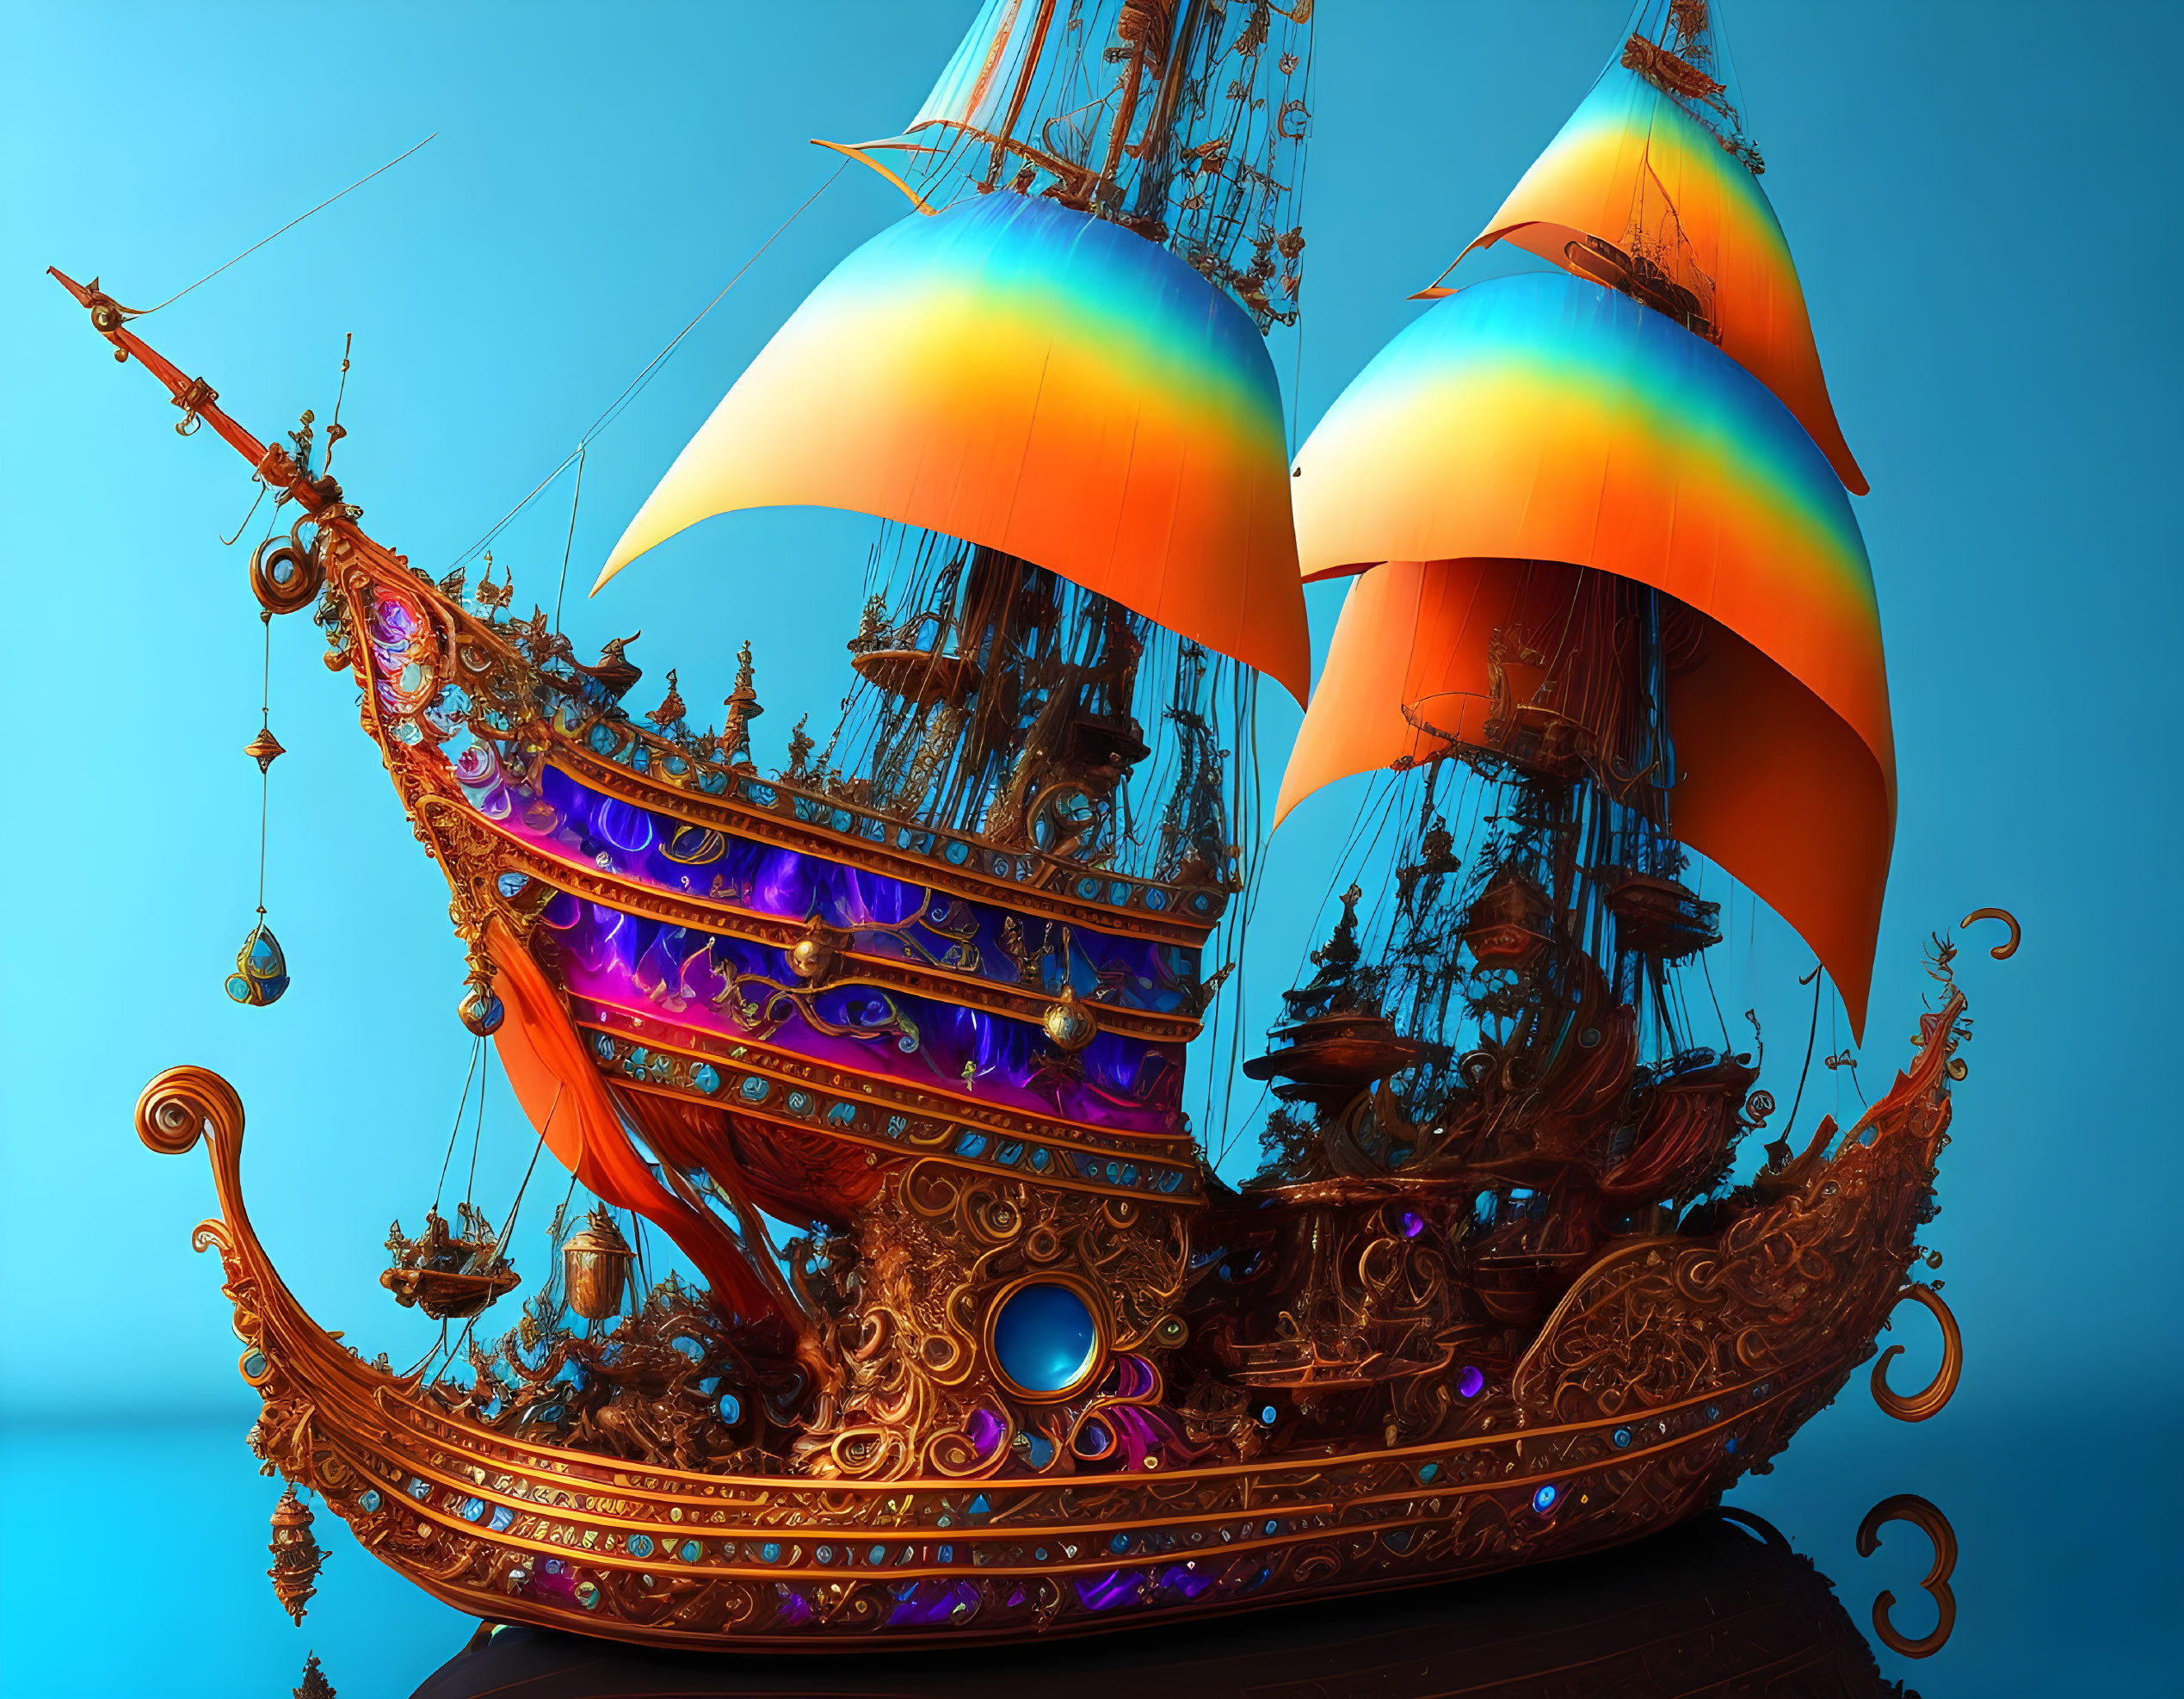 Colorful digital artwork: Fantastical ship with vibrant sails